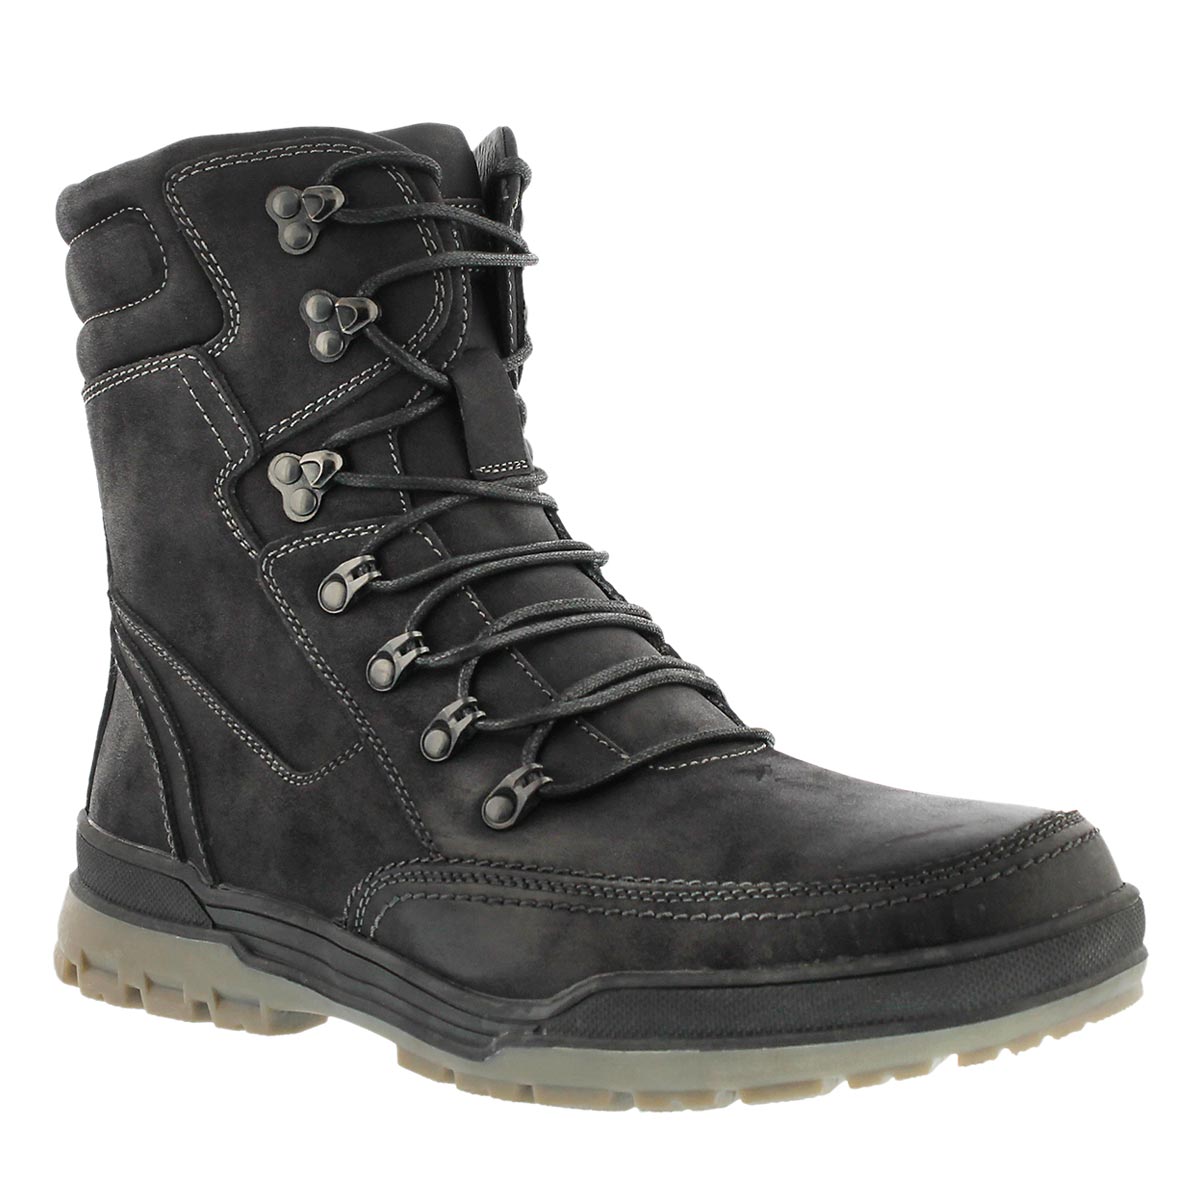 softmoc waterproof boots